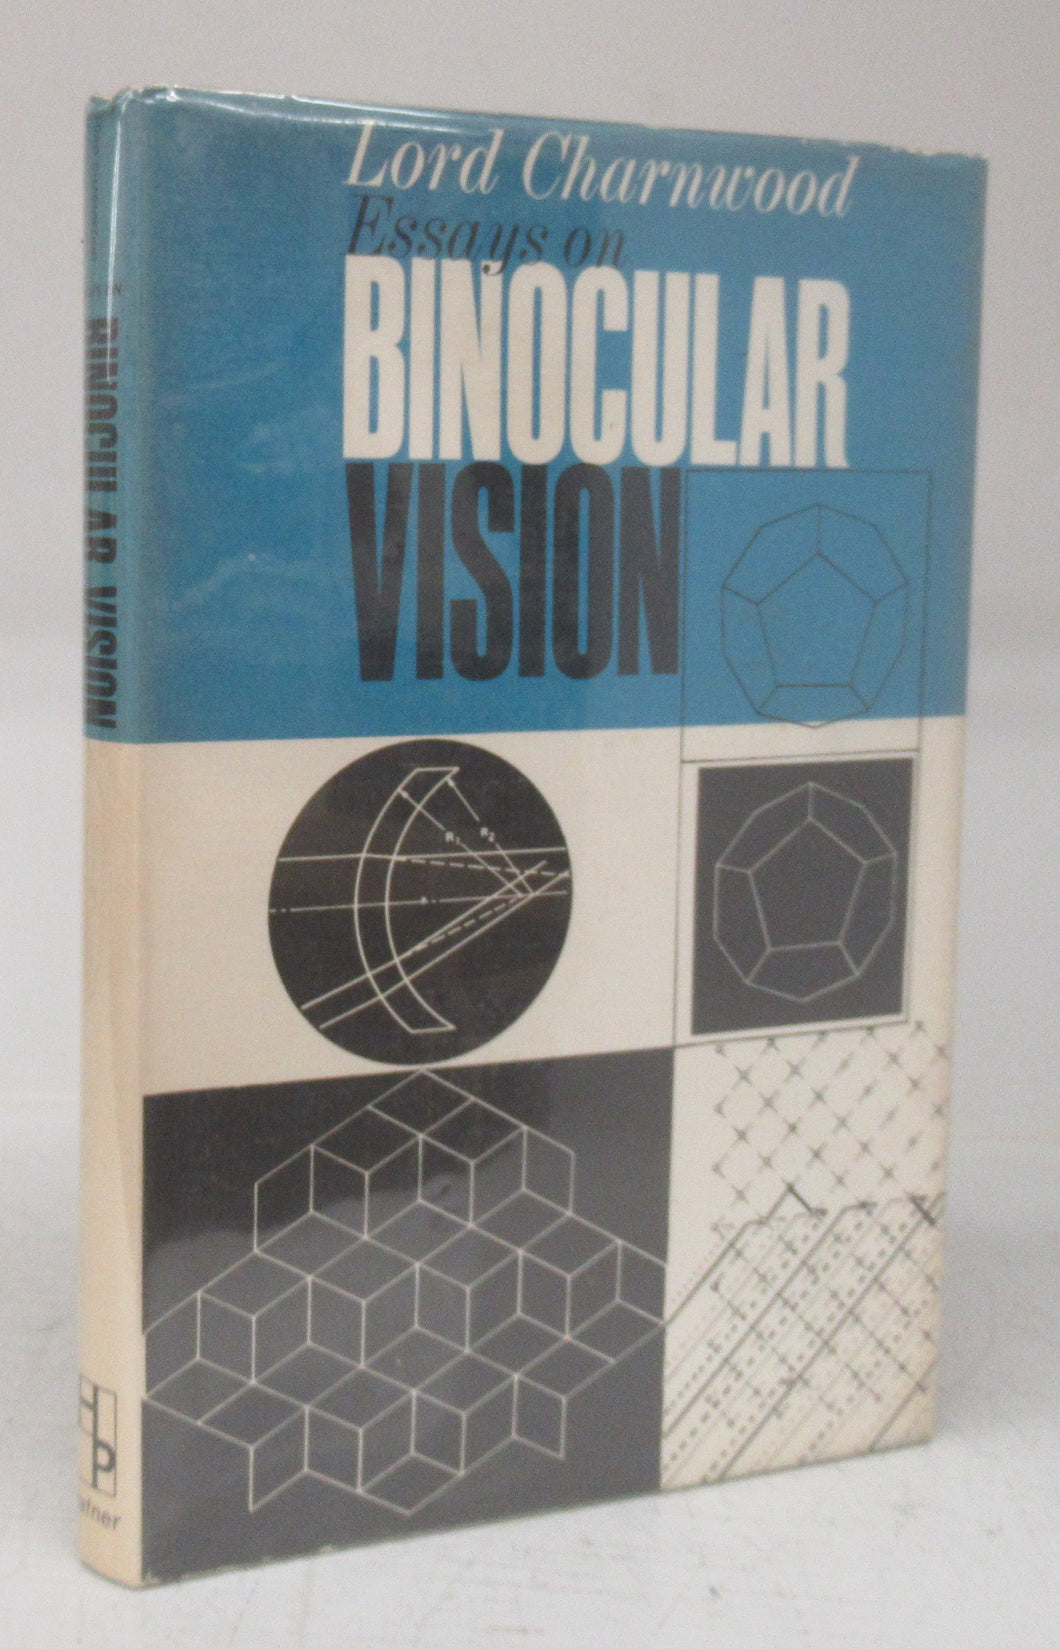 Essays on Binocular Vision